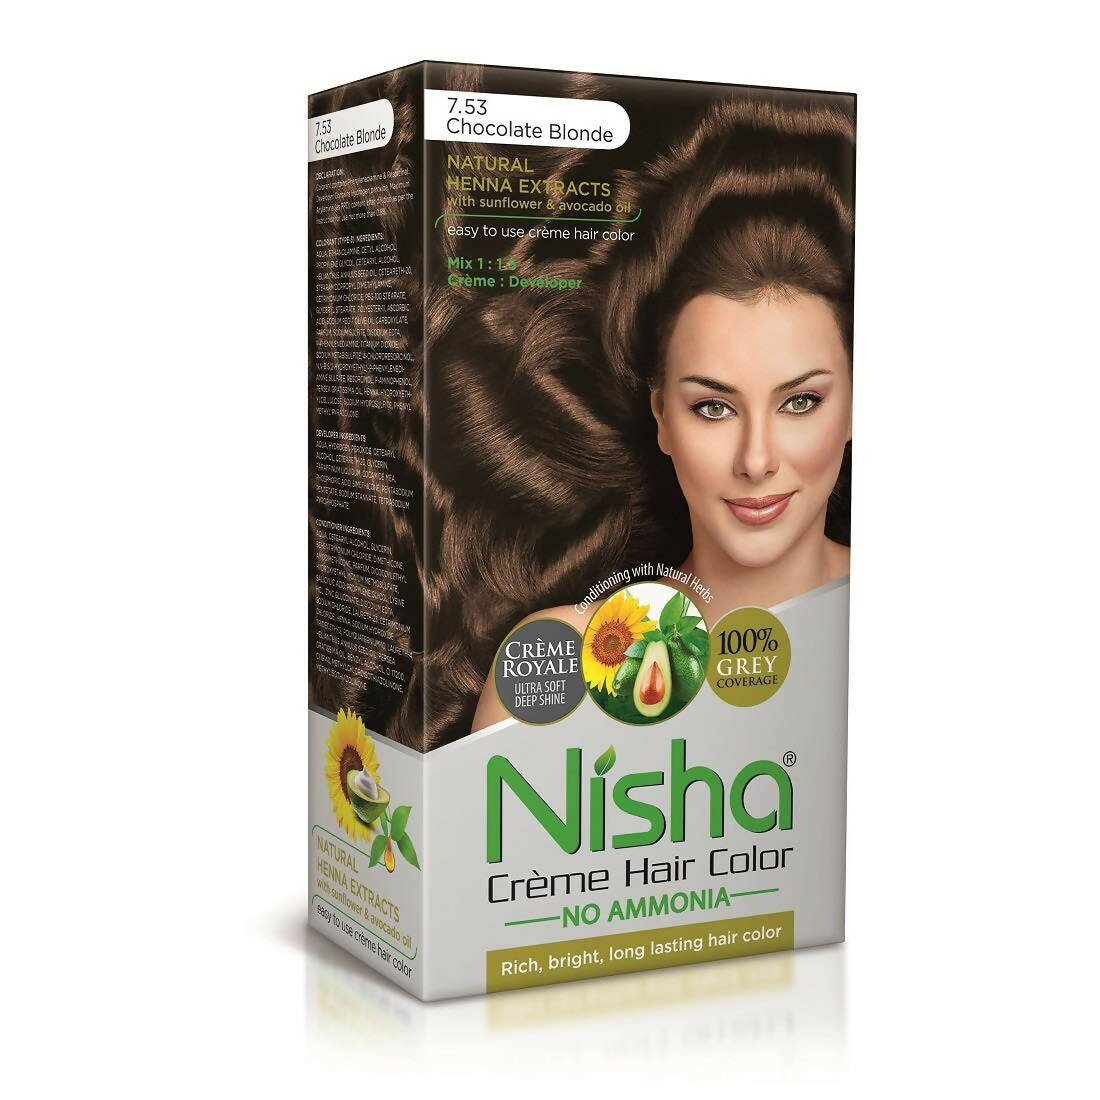 Nisha Creme Hair Color Chocolate Blonde